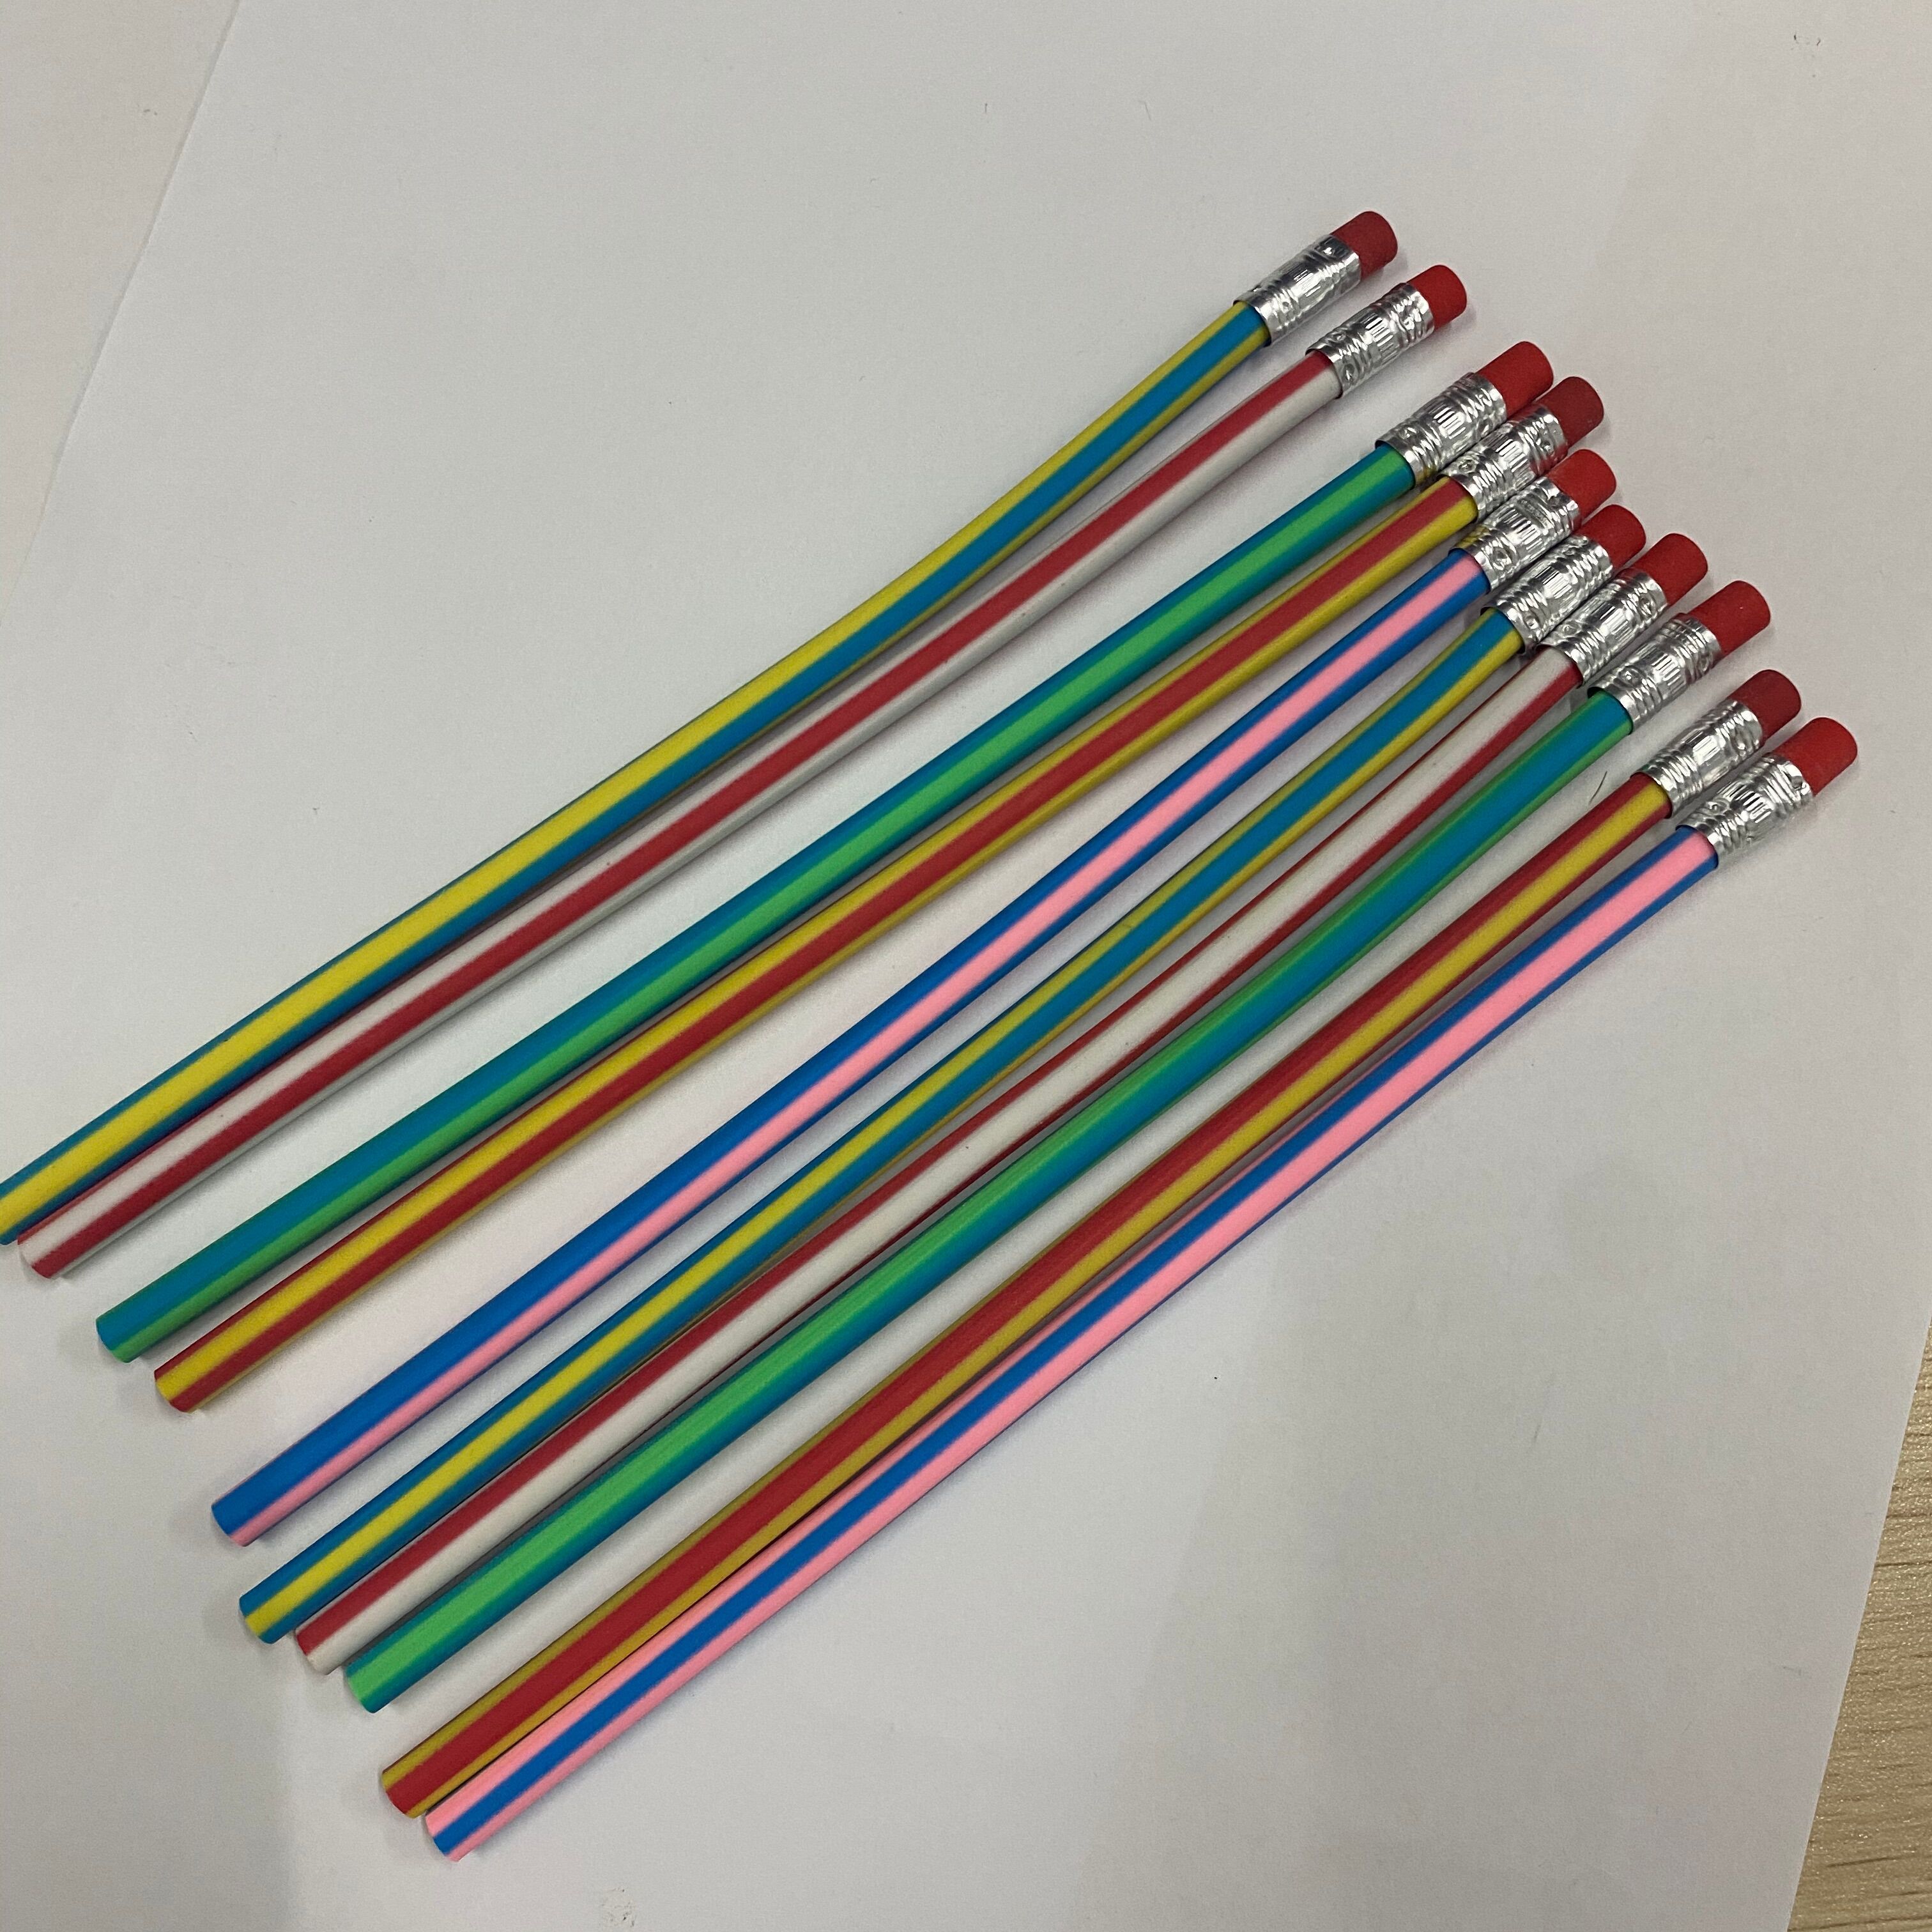 100Pcs Bendy Fun Pencils for Kids,Magic Bendable Flexible Colorful